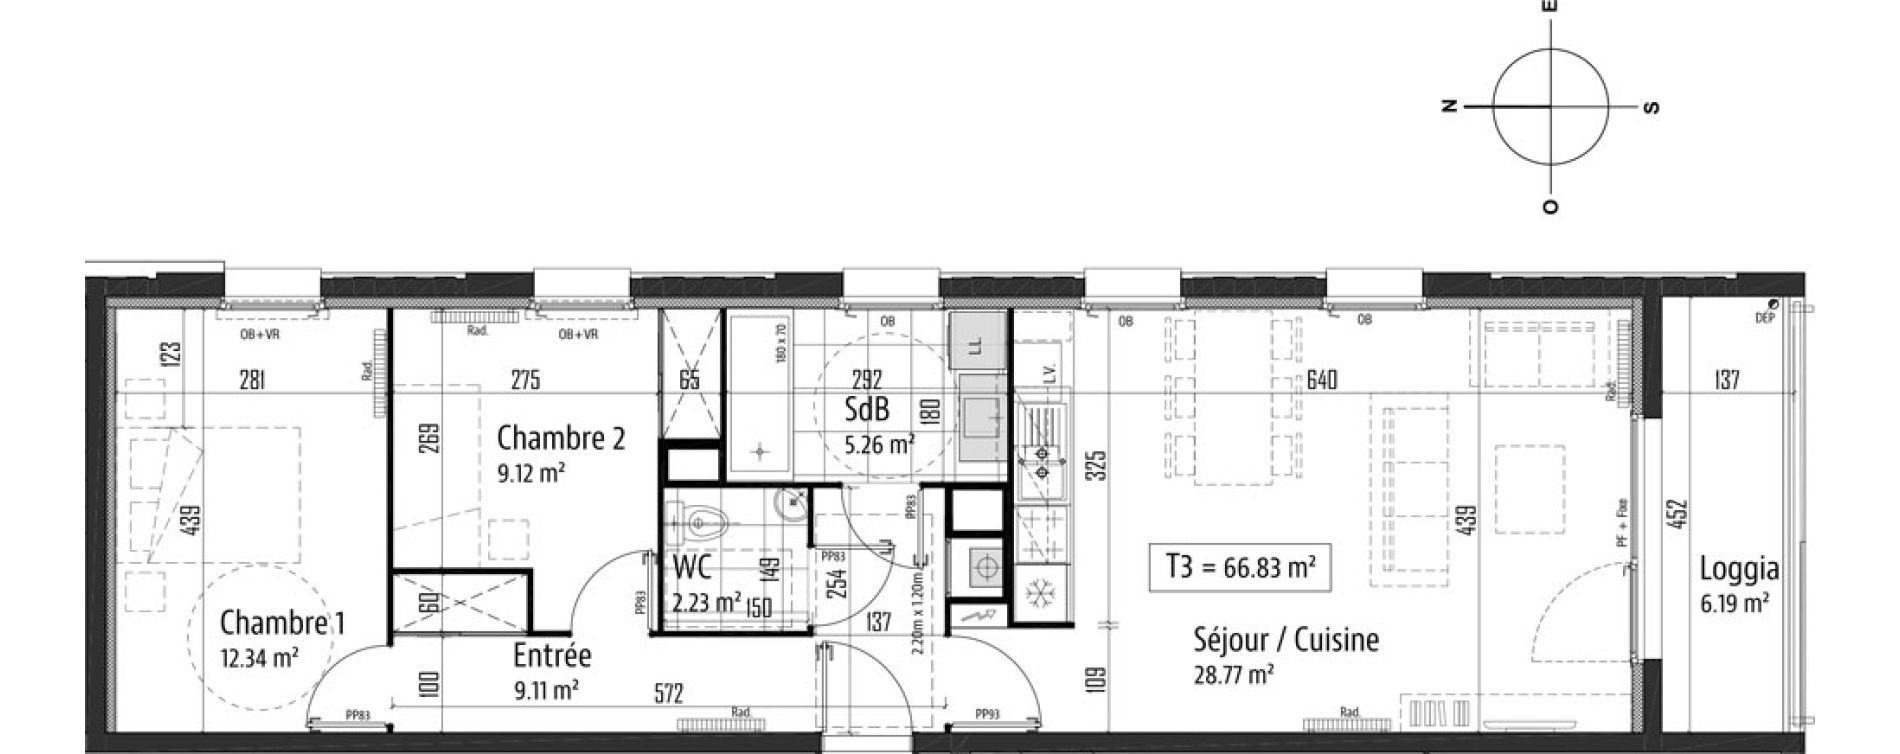 Appartement T3 de 66,83 m2 &agrave; Tourcoing Nationale